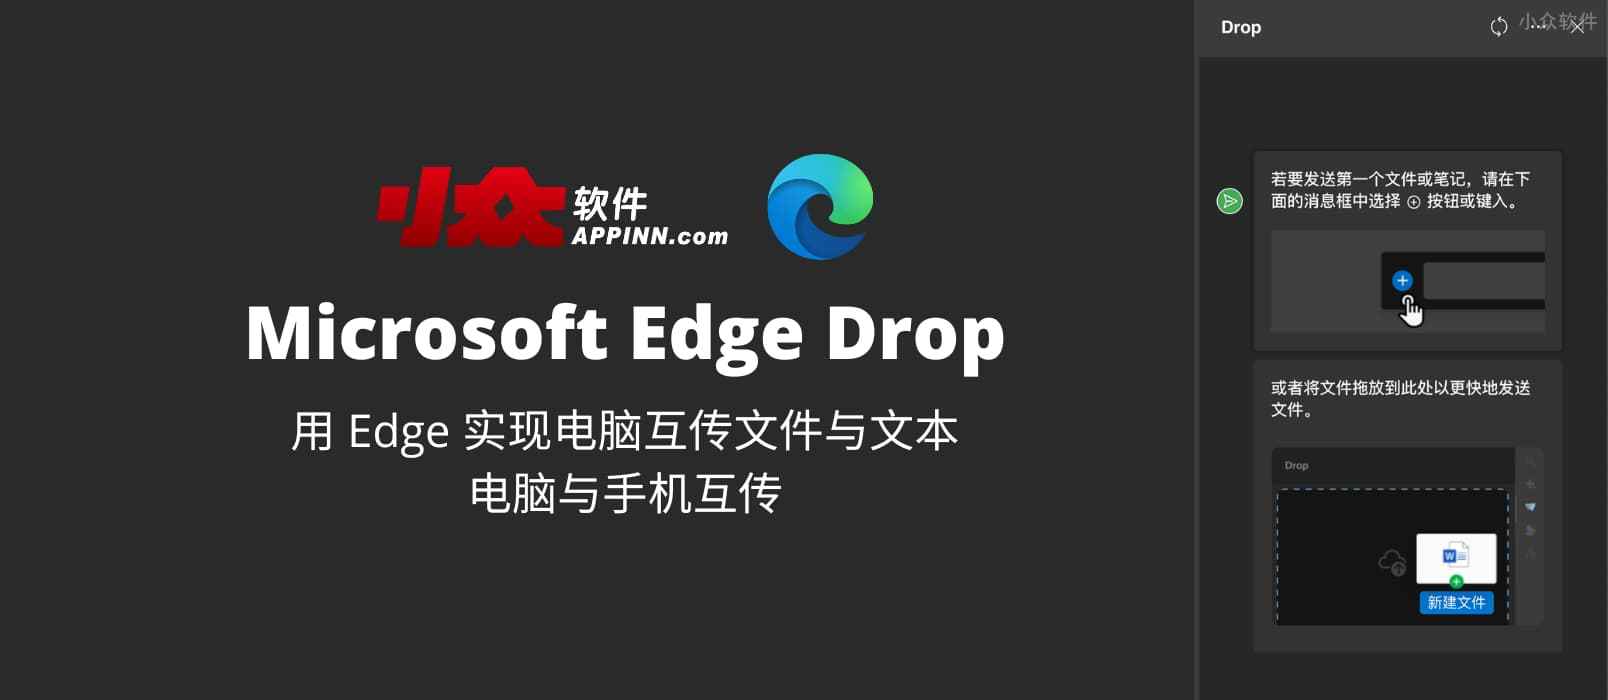 Microsoft Edge Drop - 用 Edge 实现电脑互传文件与文本，电脑与手机互传